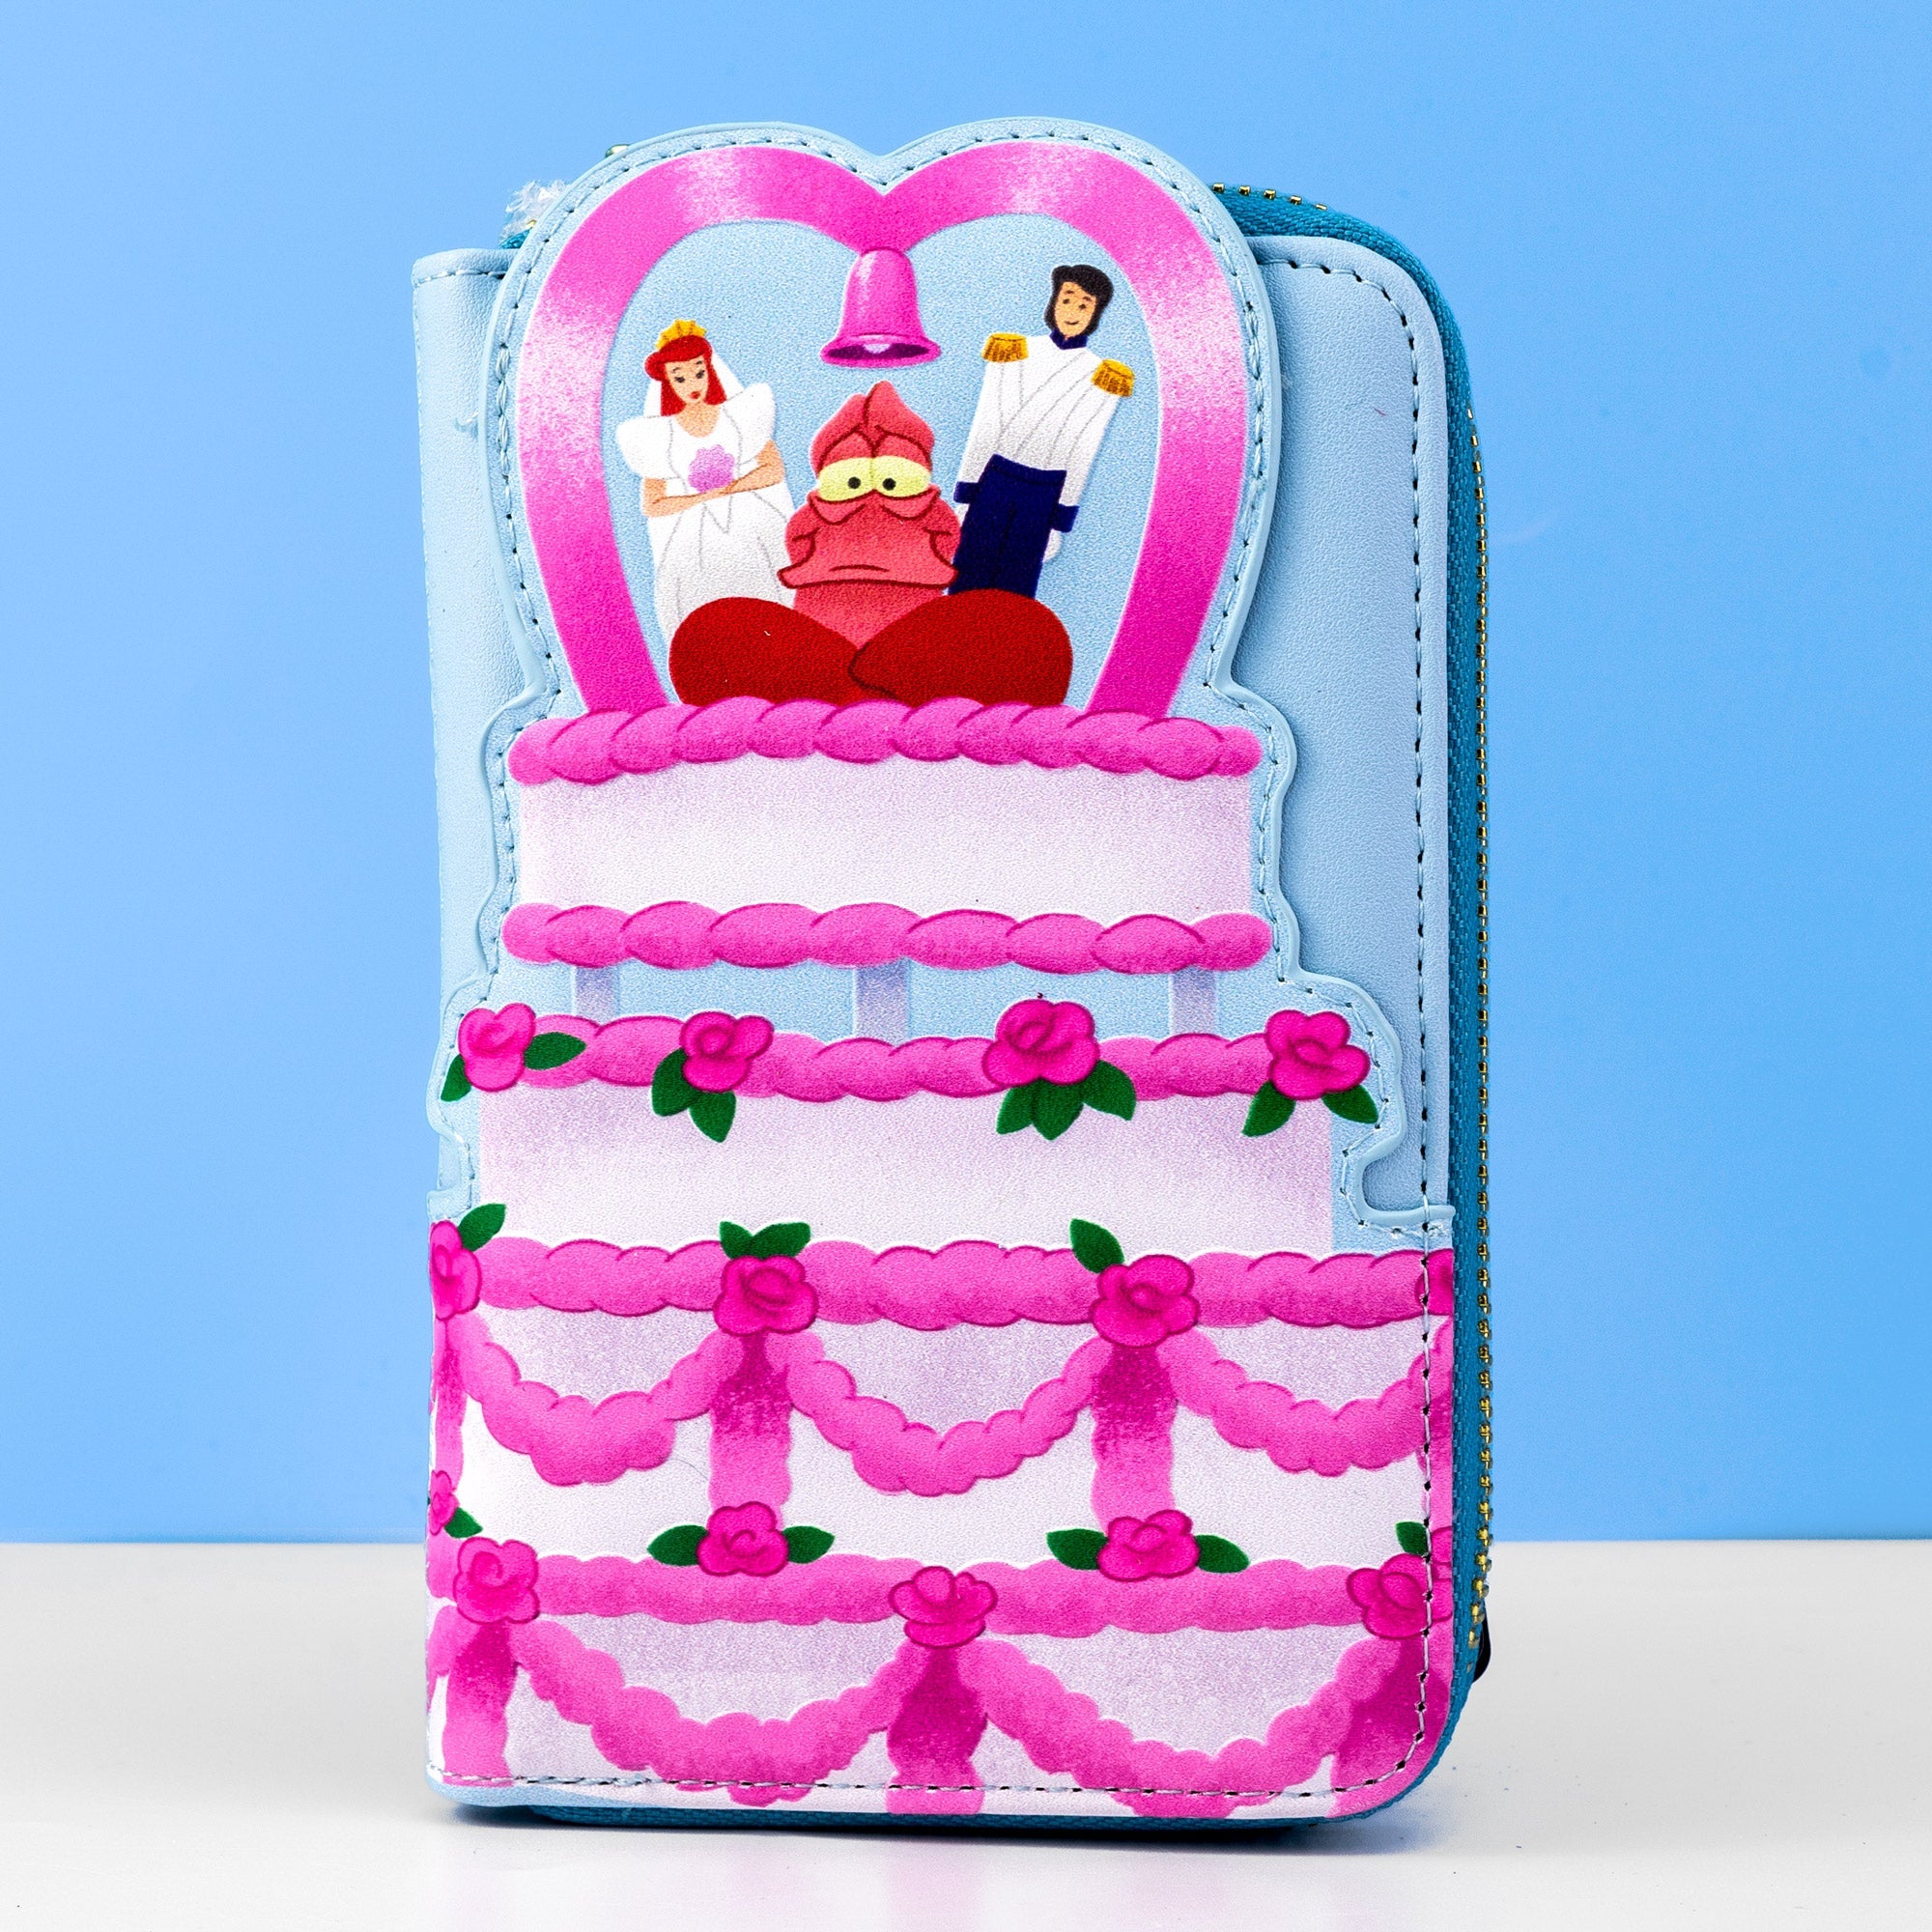 Loungefly x Disney The Little Mermaid Wedding Cake Purse - GeekCore